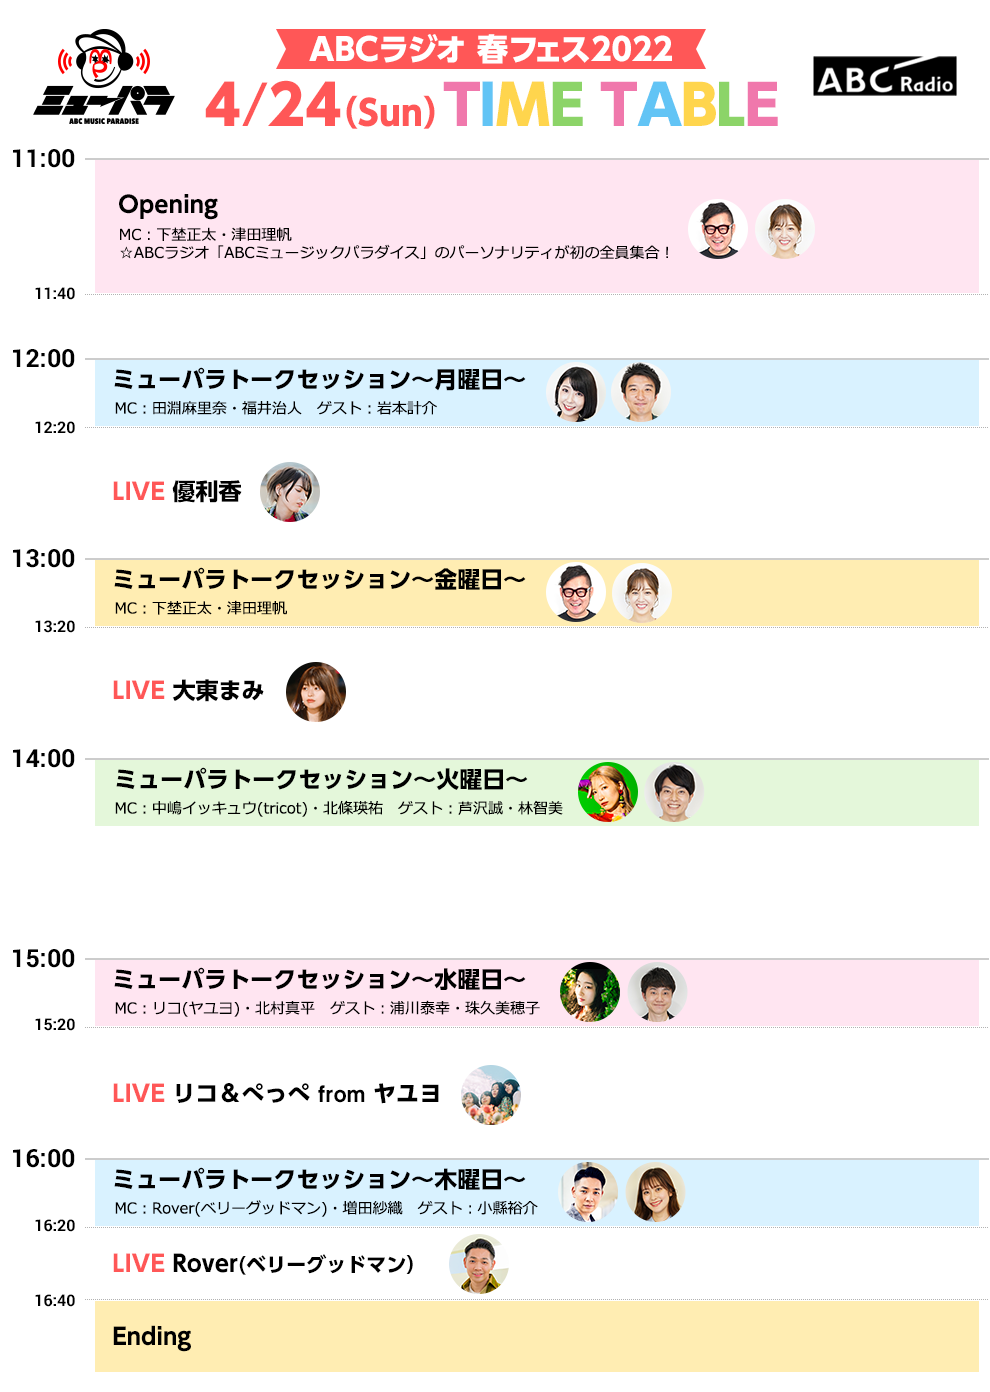 ABCラジオ 春フェス20224/24(Sun) TIME TABLE
